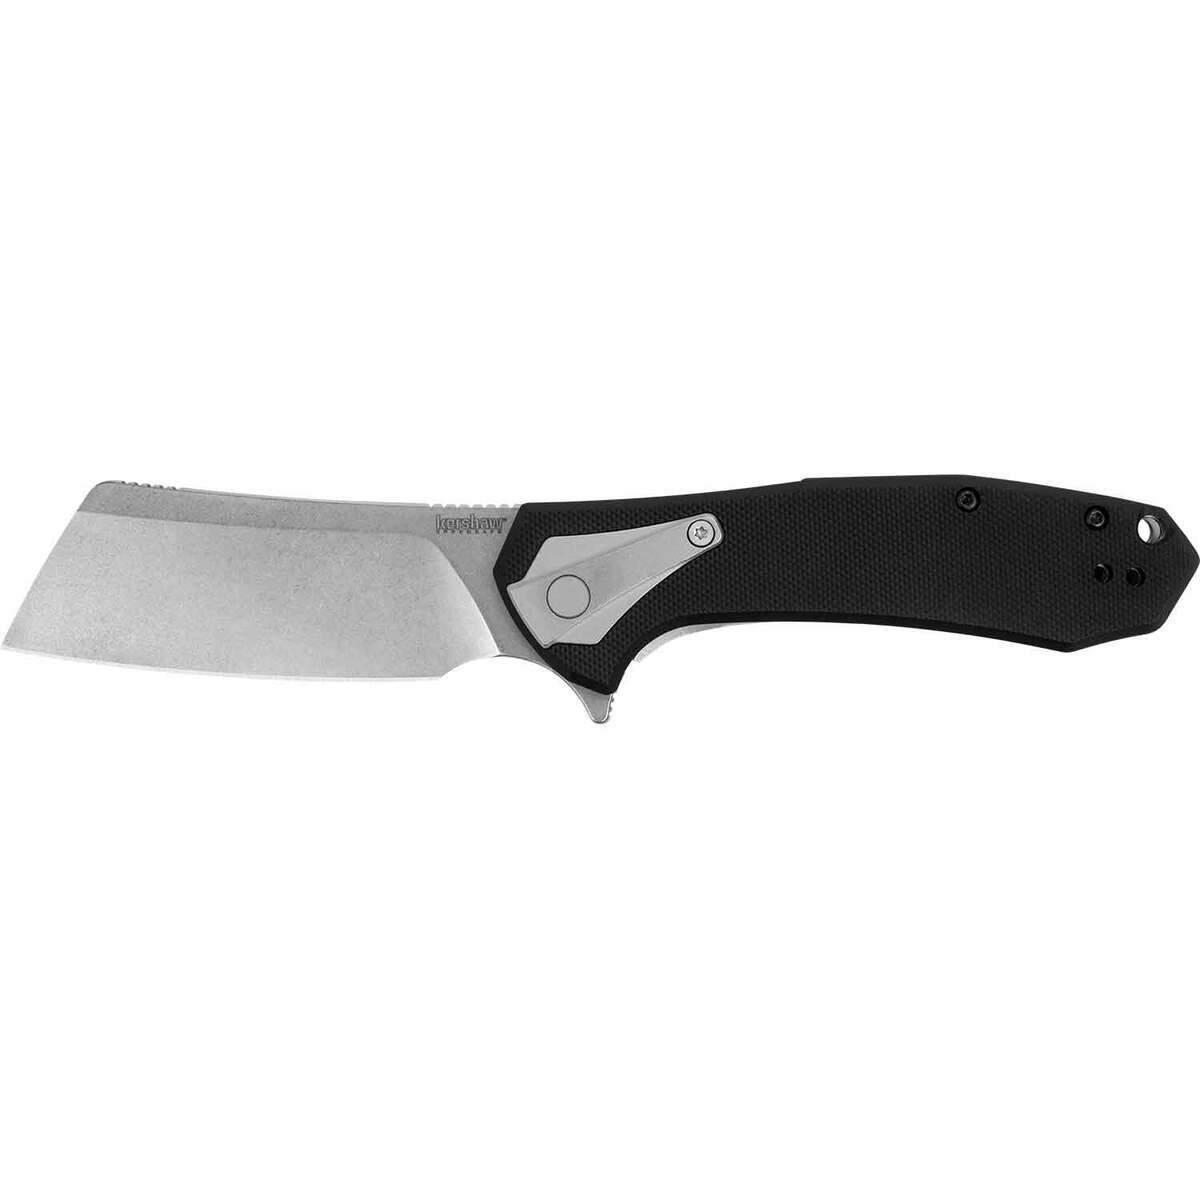 https://www.sportsmans.com/medias/kershaw-bracket-34-inch-folding-knife-black-1738360-1.jpg?context=bWFzdGVyfGltYWdlc3wyOTk0NnxpbWFnZS9qcGVnfGg4Ny9oNmUvMTA0NTY3OTg0MjkyMTQvMTczODM2MC0xX2Jhc2UtY29udmVyc2lvbkZvcm1hdF8xMjAwLWNvbnZlcnNpb25Gb3JtYXR8OWZjZWNkMjVkN2VkYzM3NDQyM2NiY2FiNjRmZjdmZDExNmI3ZGJlZjRmNGI3NmUwZDY5NmVlMGNlNjRjYjVlOQ